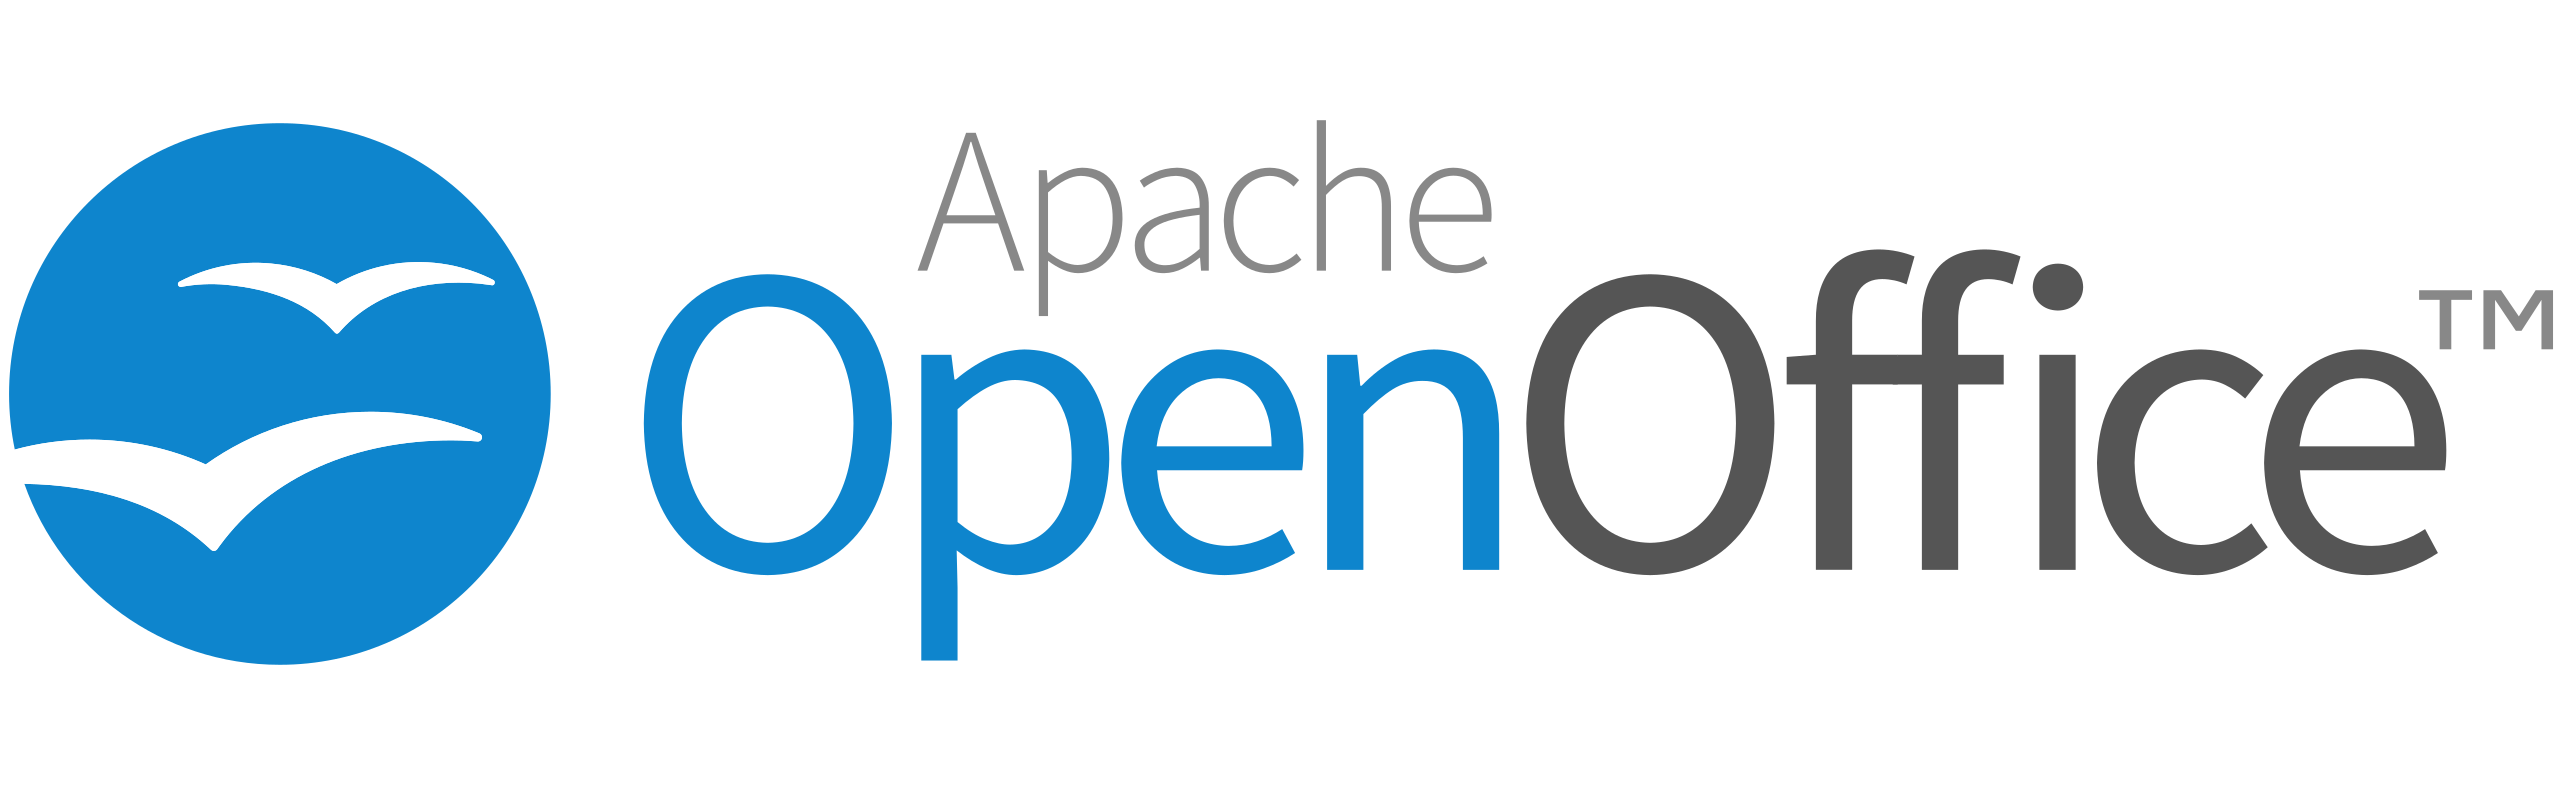 File:Apache OpenOffice logo and wordmark (2014).svg - Wikimedia Commons